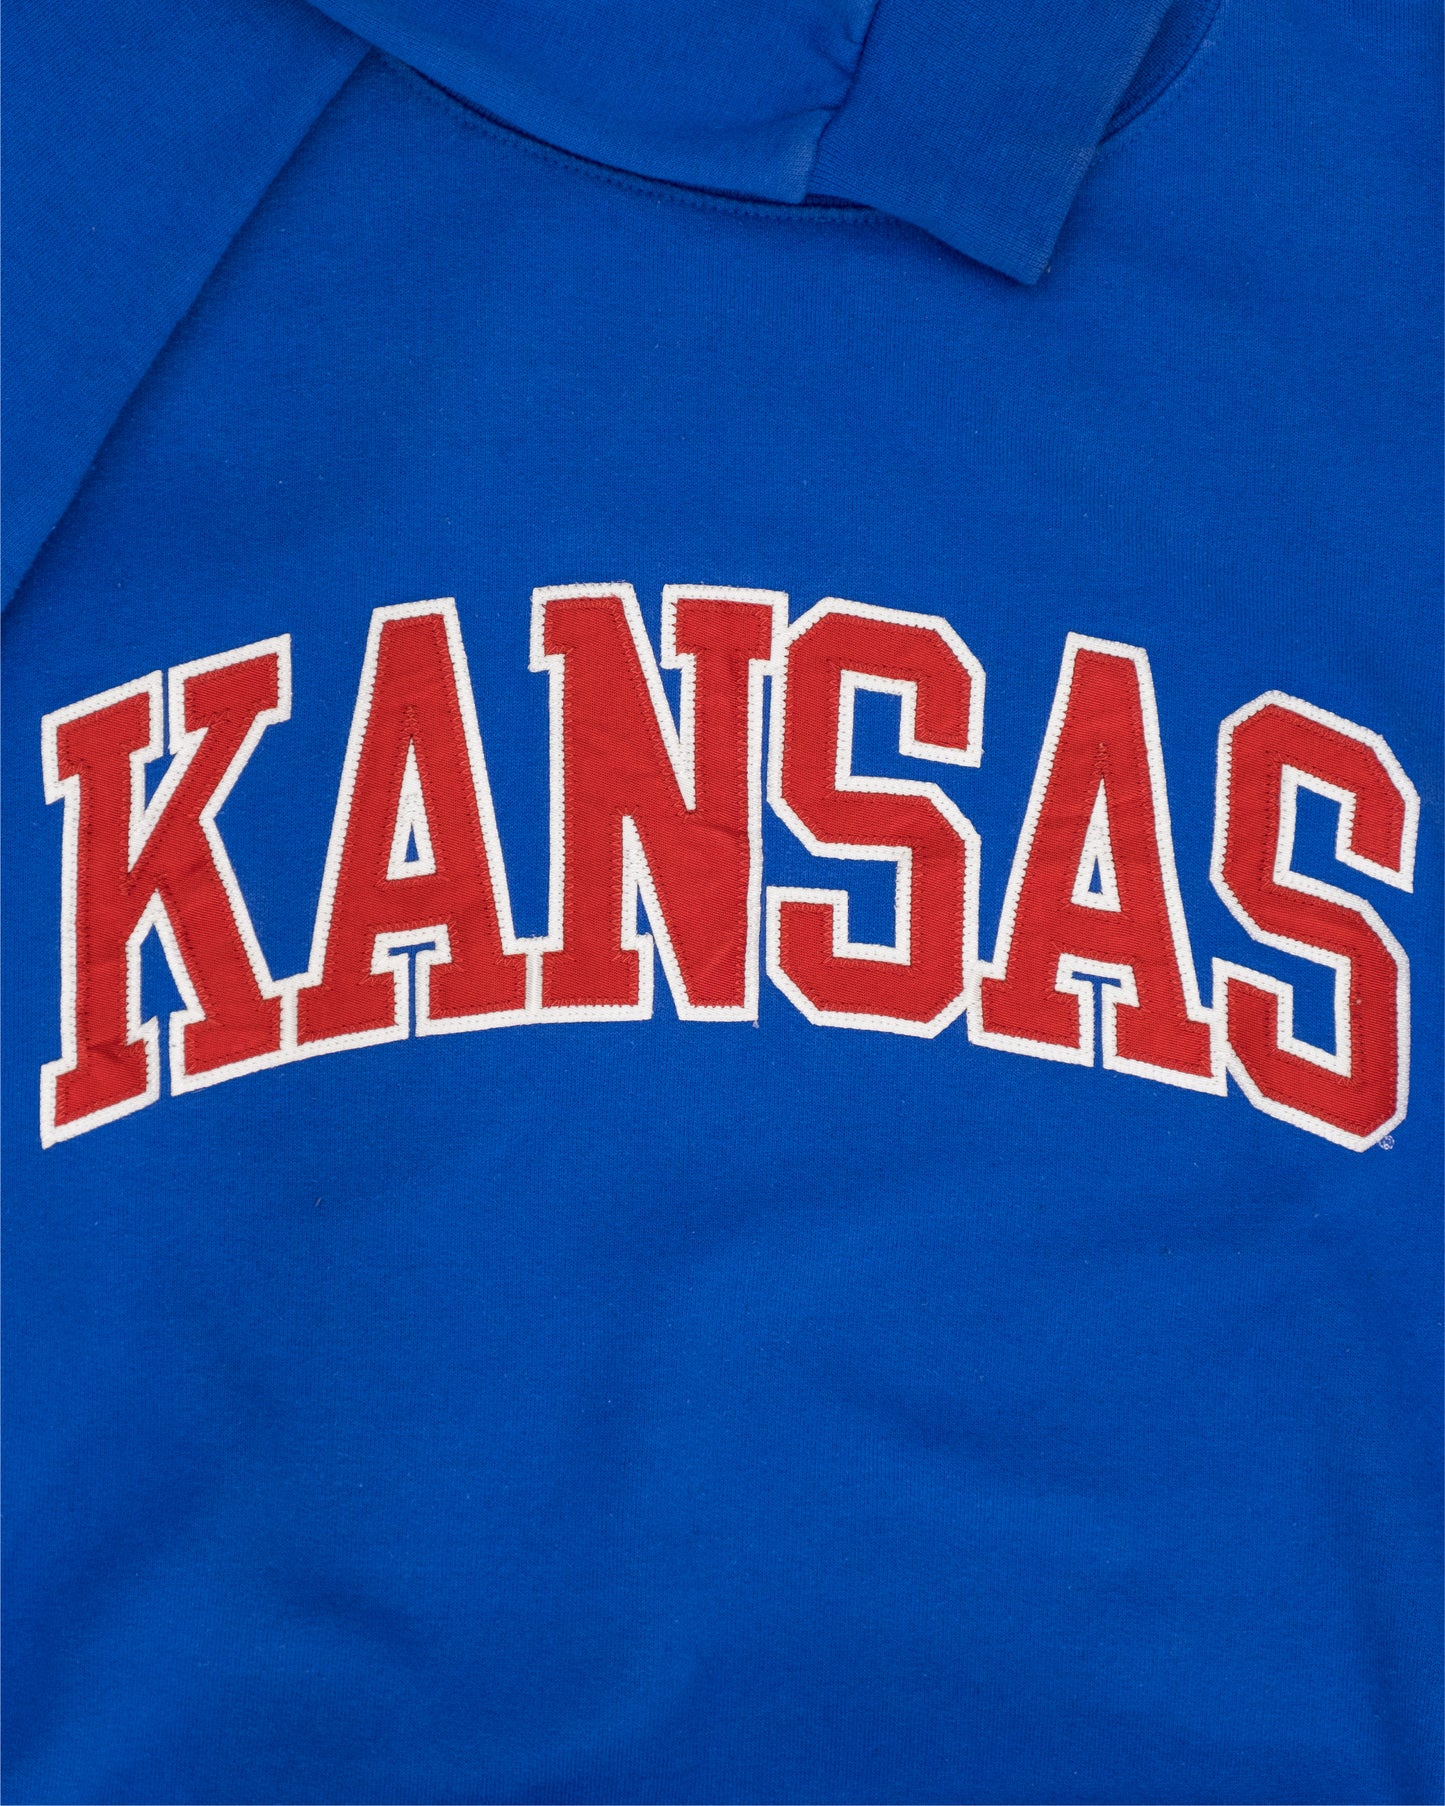 Champion Kansas Sweatshirt